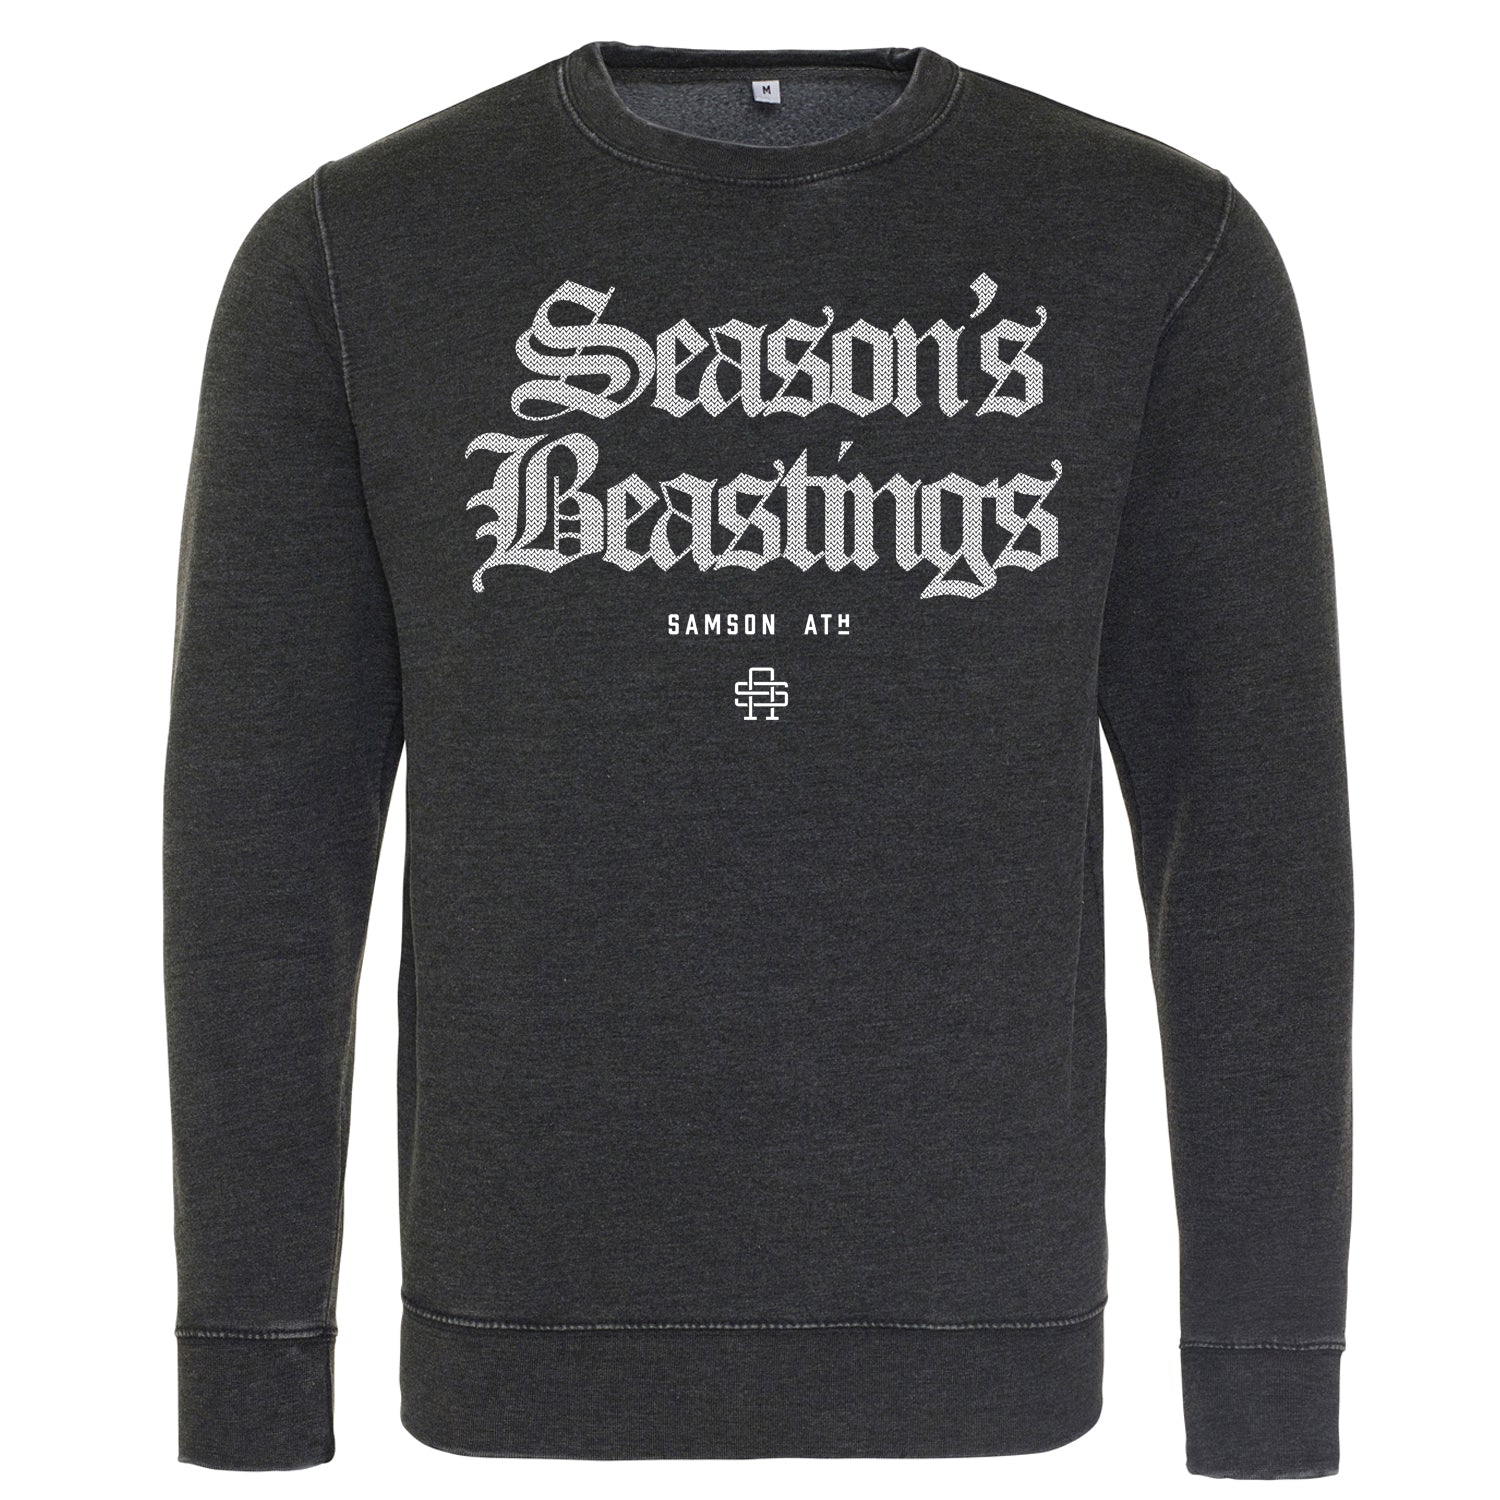 Season’s Beastings - Christmas Sweatshirt